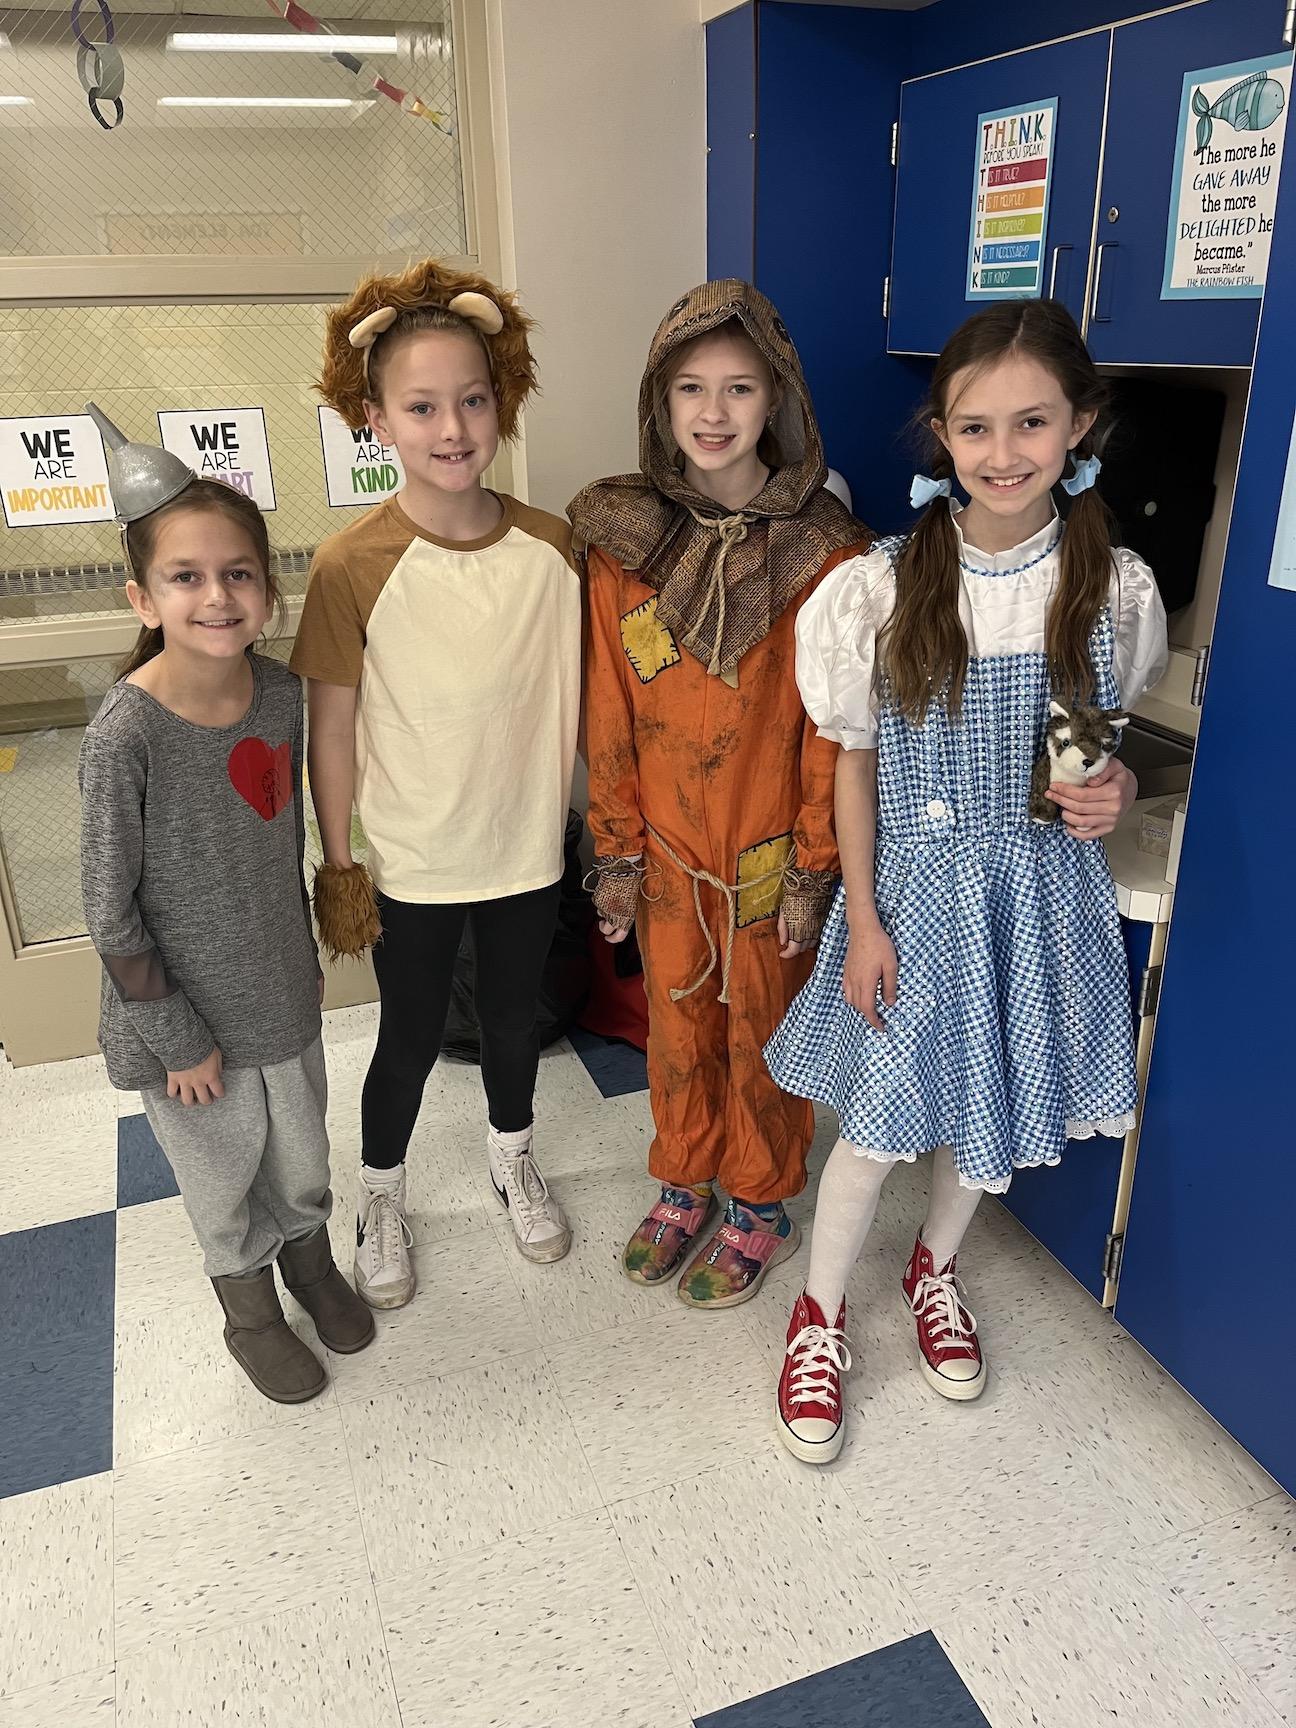 The Wizard of Oz:  Hallie Colmeman as Tinman, Lyla Lebe as Lion, Maddie Meyer as Scarecrow, Annie Onderek as Dorothy